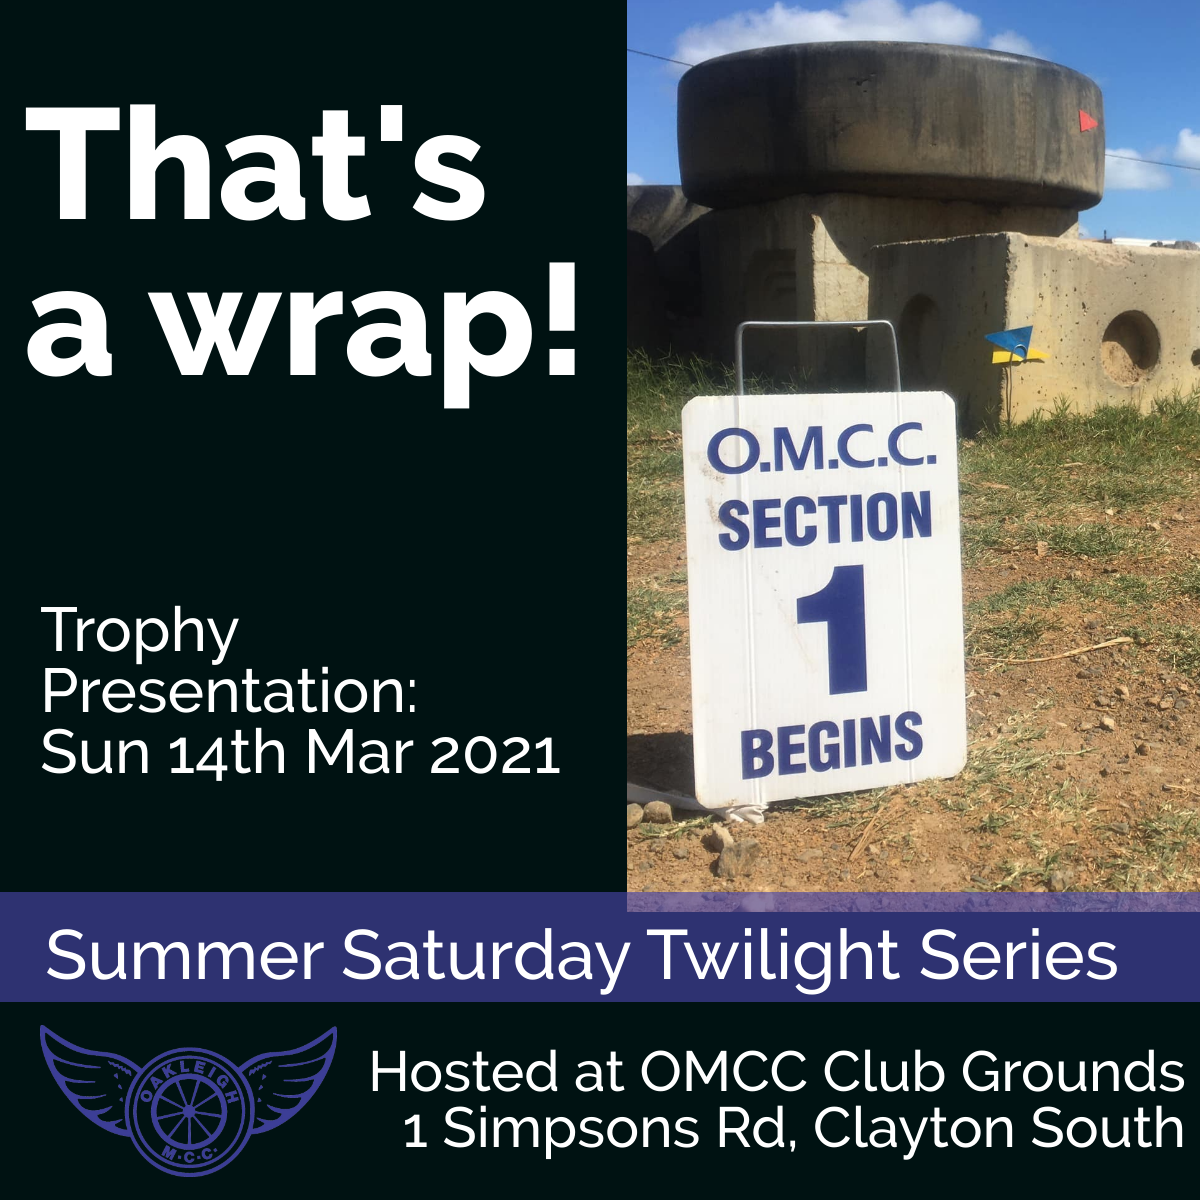 OMCC Summer Series Round 4 & Series Results